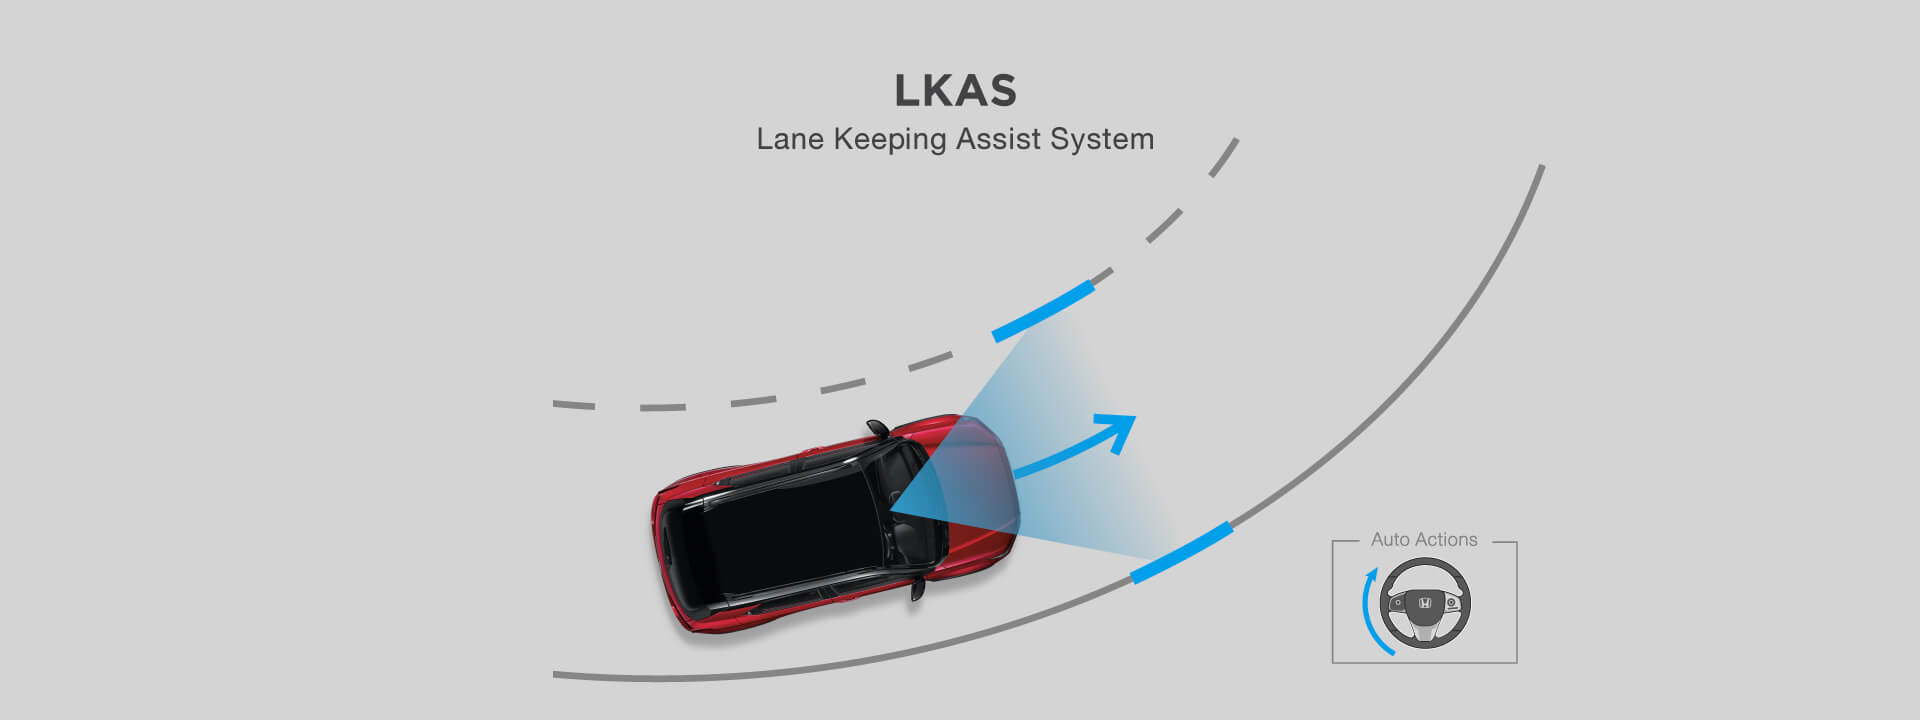 Lane Keeping Assist System : LKAS